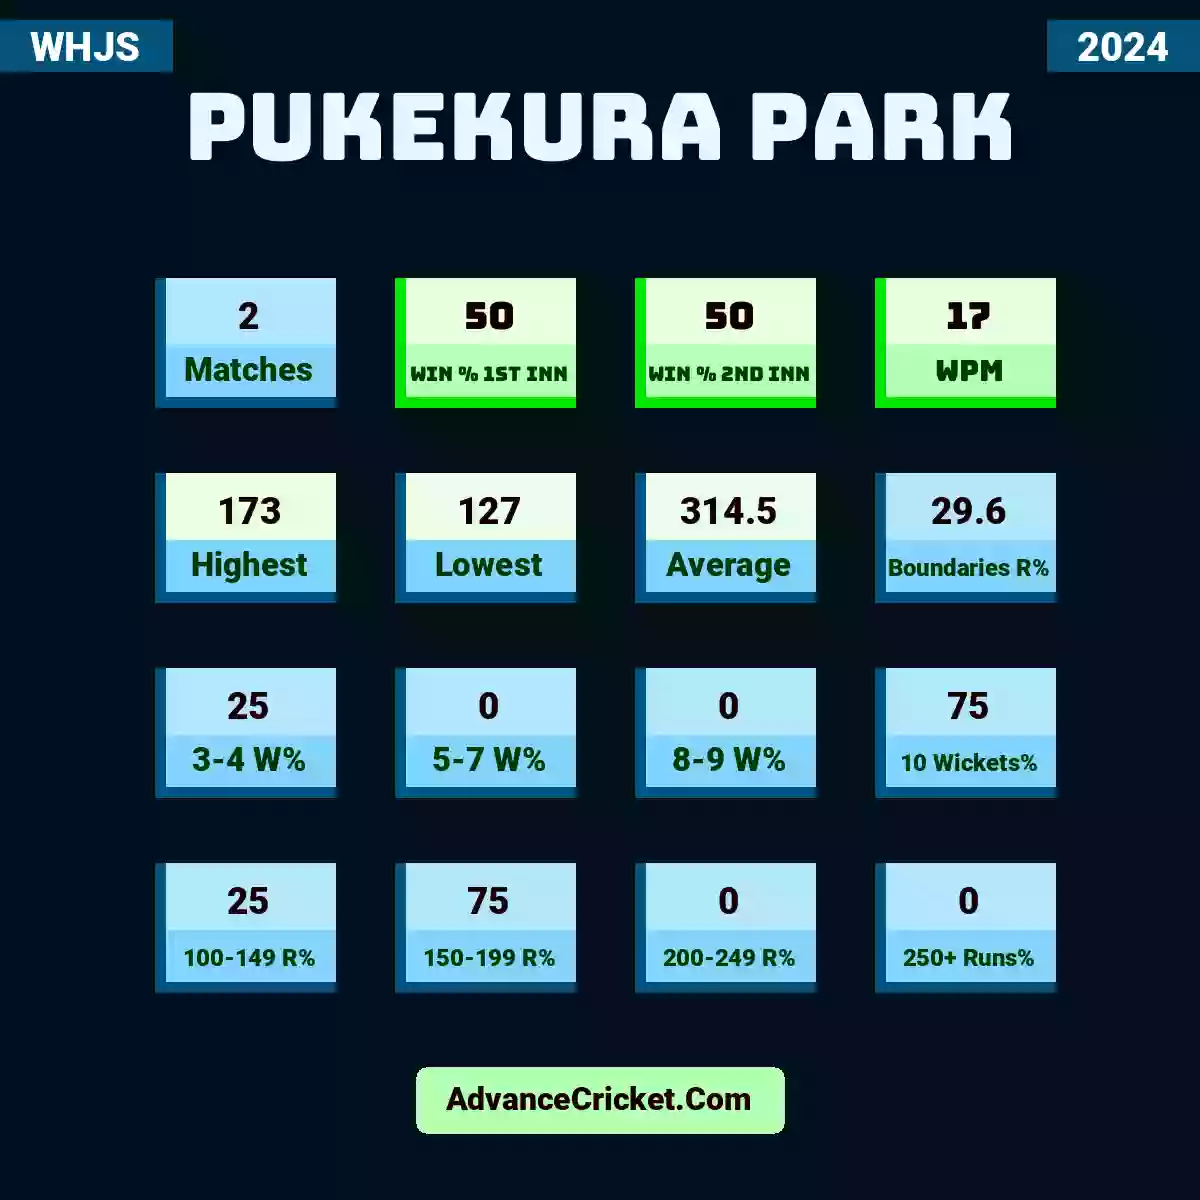 Image showing Pukekura Park with Matches: 2, Win % 1st Inn: 50, Win % 2nd Inn: 50, WPM: 17, Highest: 173, Lowest: 127, Average: 314.5, Boundaries R%: 29.6, 3-4 W%: 25, 5-7 W%: 0, 8-9 W%: 0, 10 Wickets%: 75, 100-149 R%: 25, 150-199 R%: 75, 200-249 R%: 0, 250+ Runs%: 0.